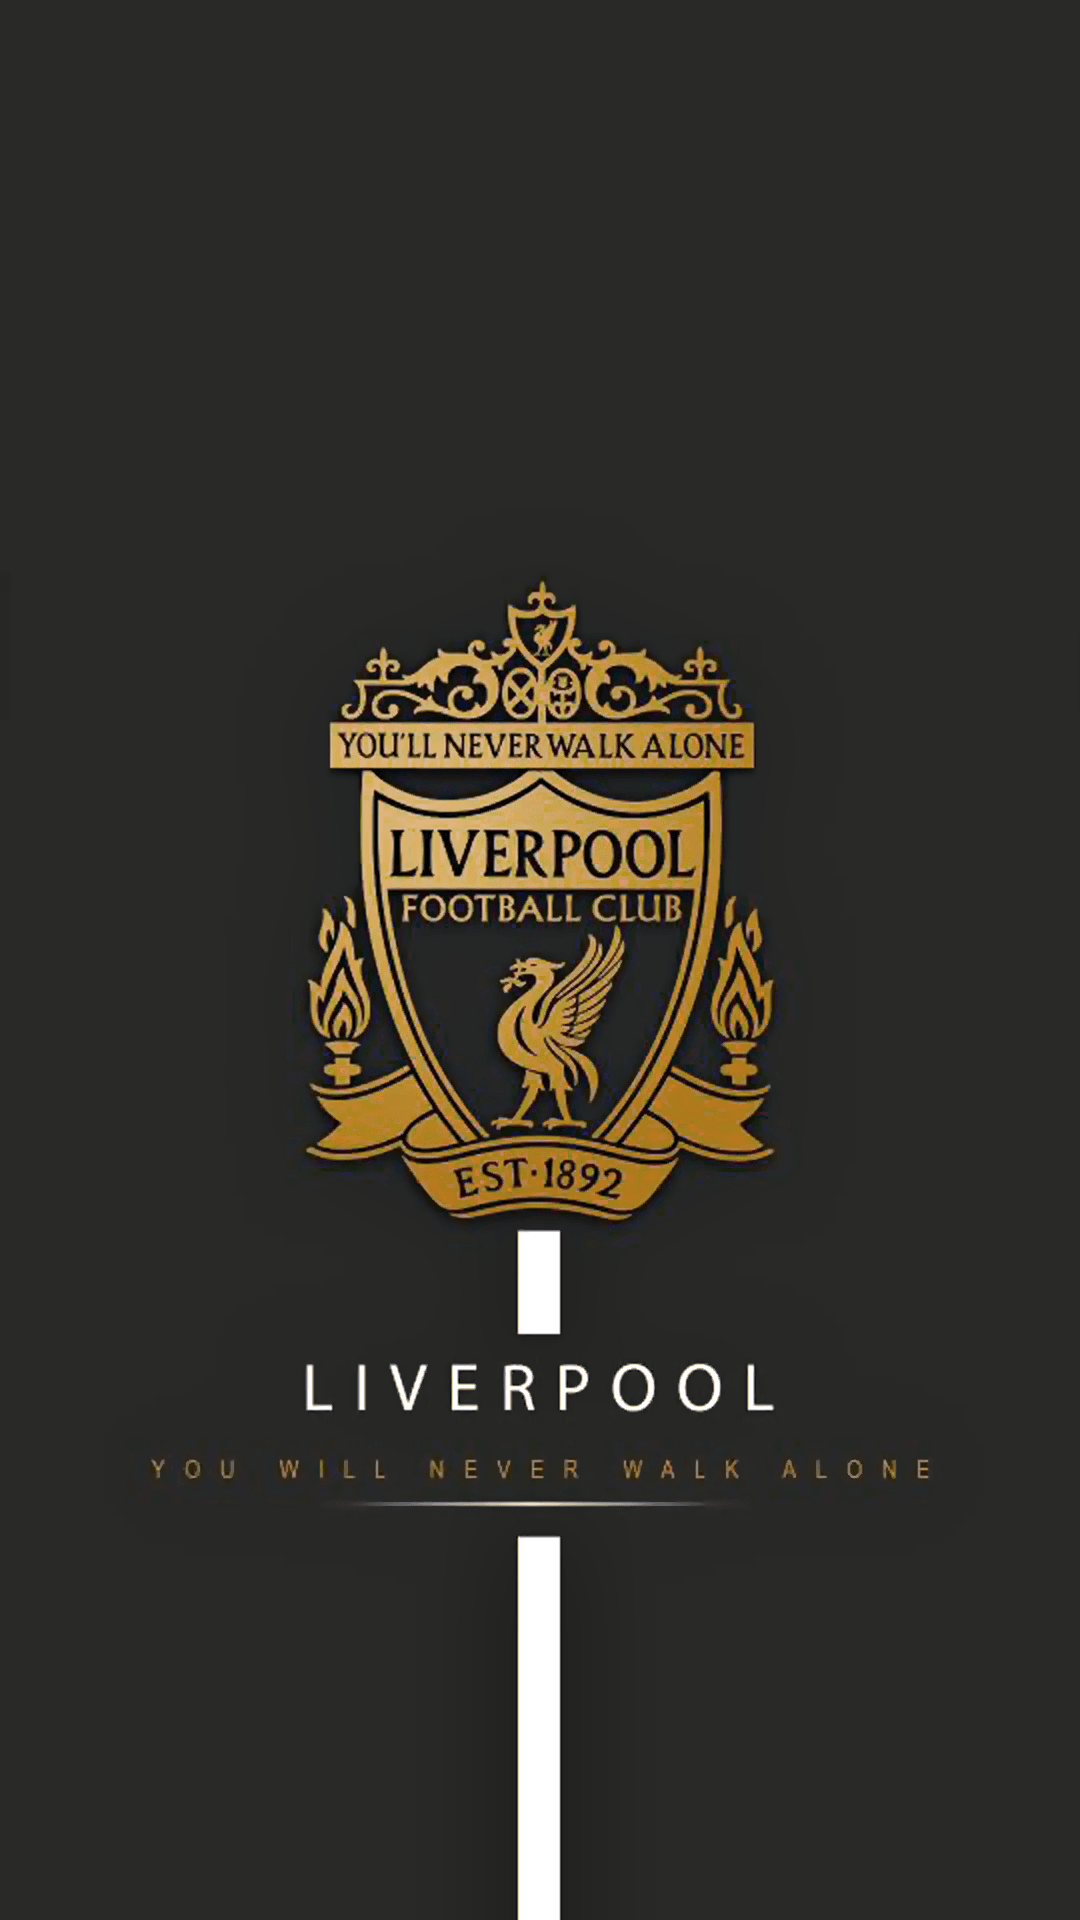 Never Walke Alone. Liverpool. Liverpool football club